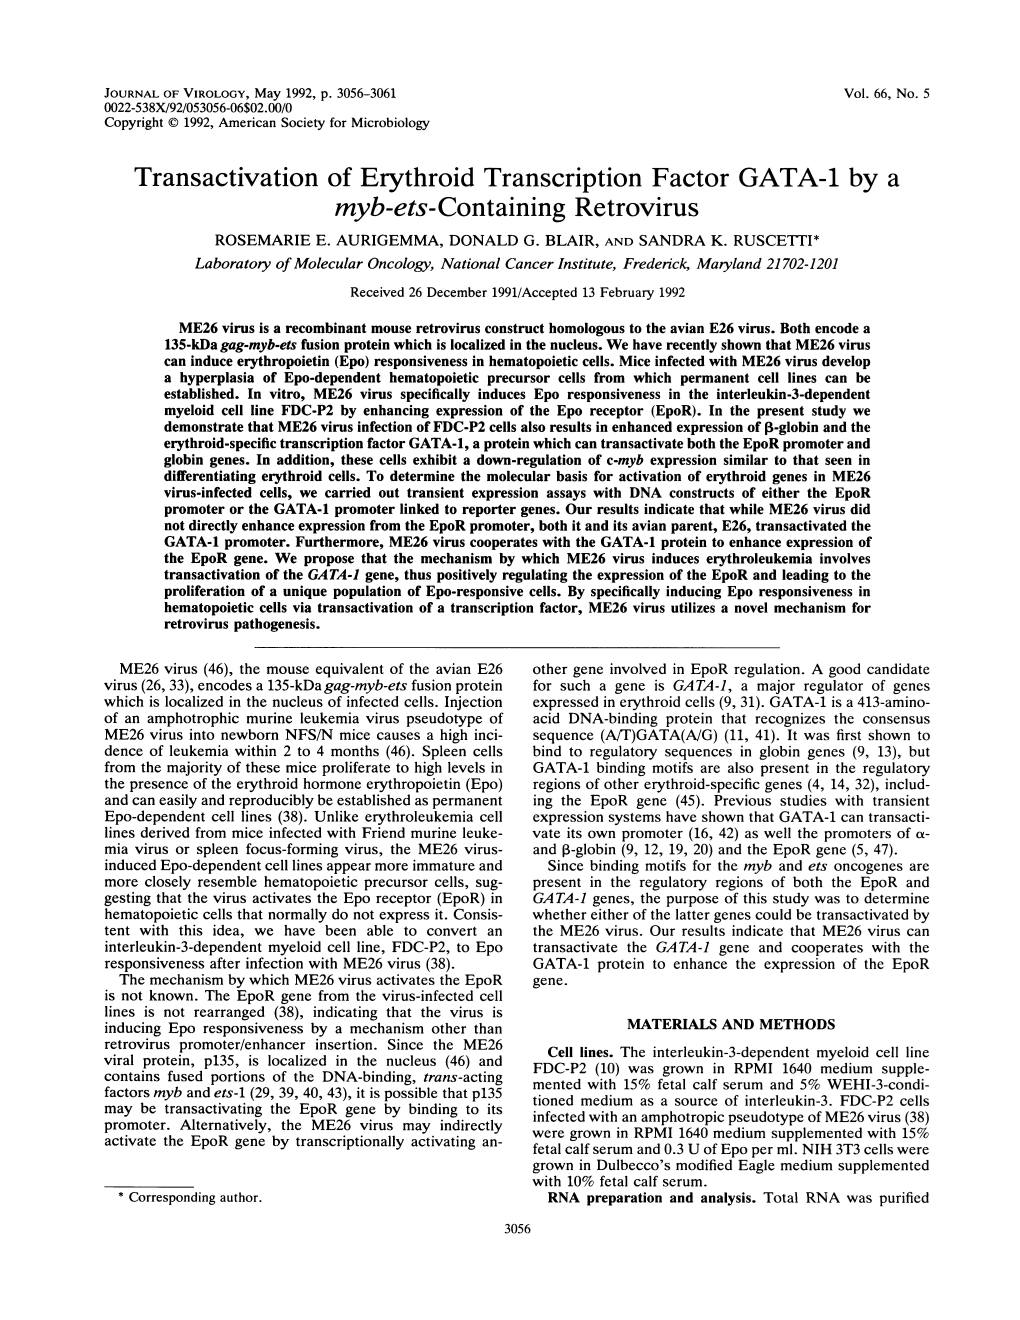 Transactivation of Erythroid Transcription Factor GATA-1 by a Myb-Ets-Containing Retrovirus ROSEMARIE E